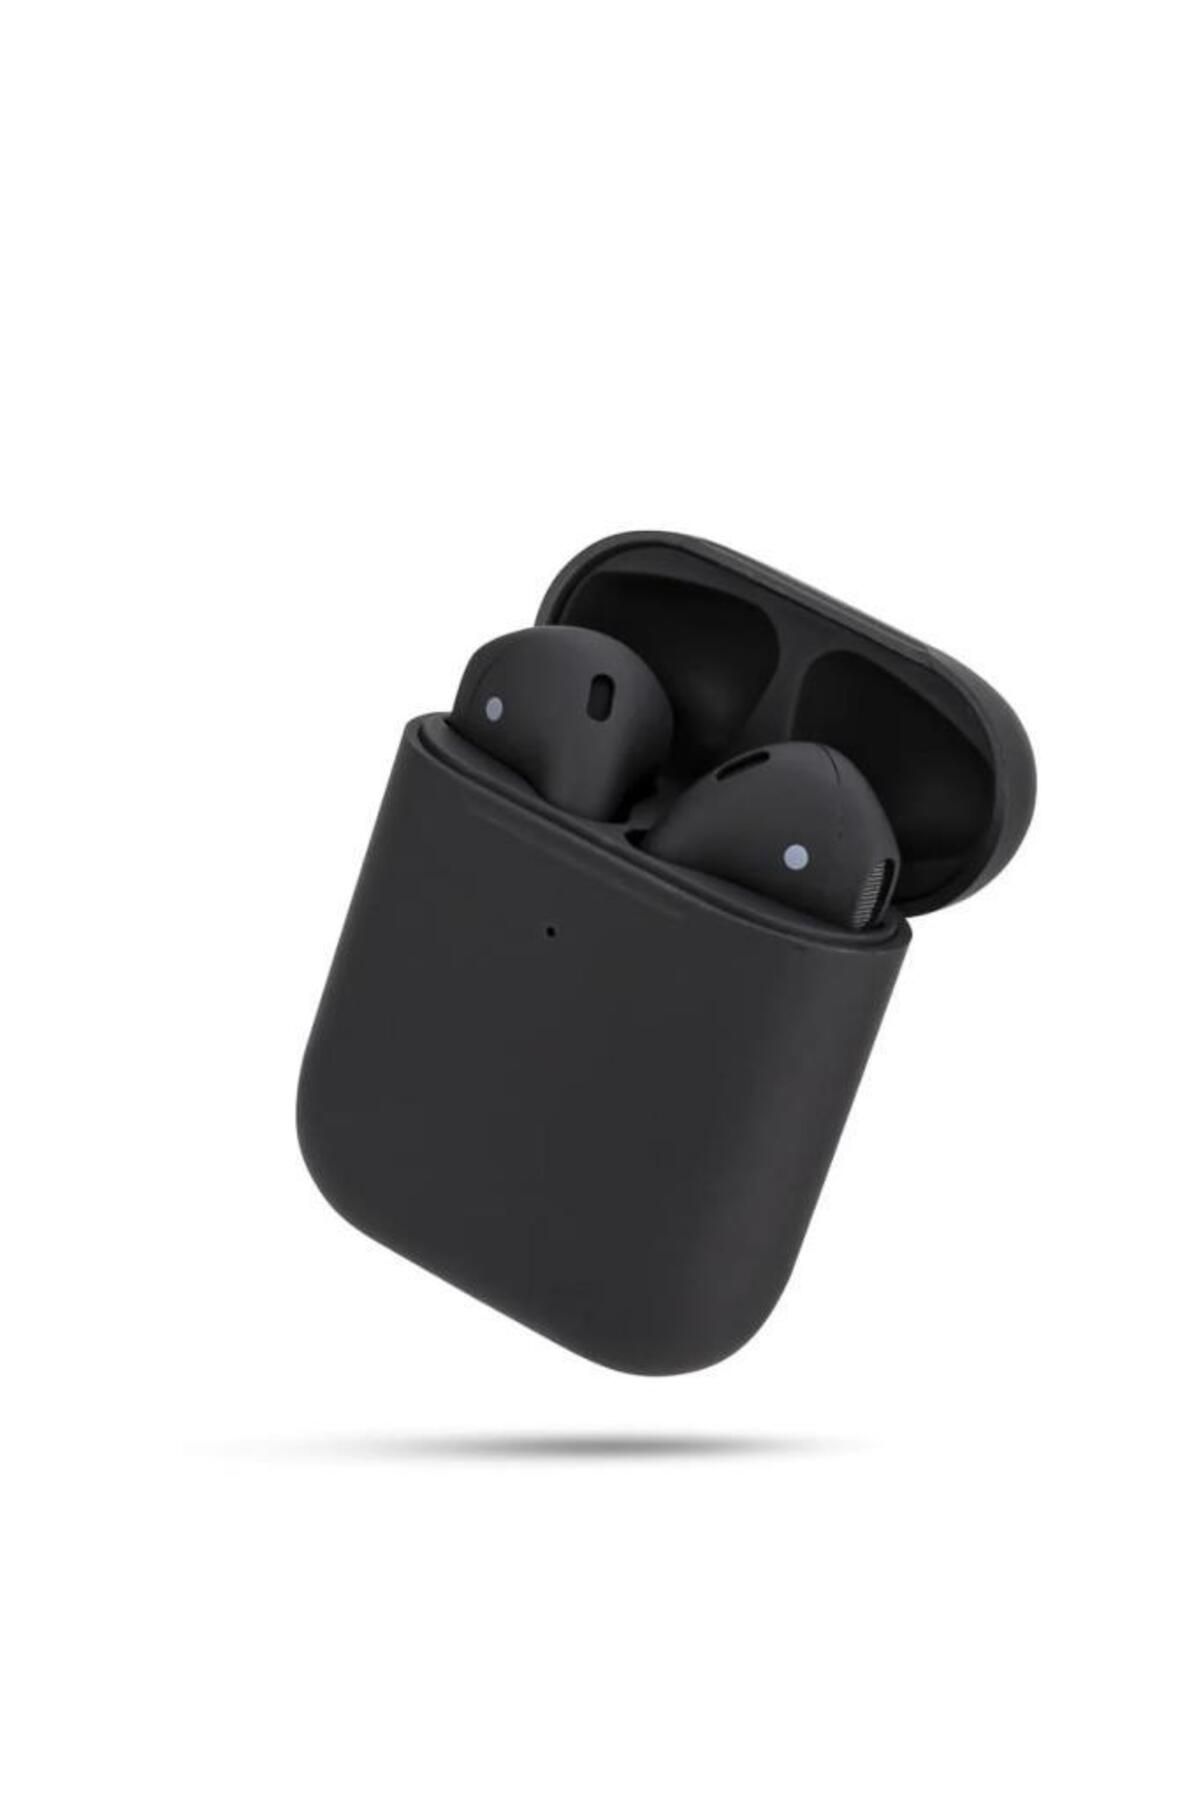 Torima İ18 Pro Tüm Cihazlara Uyumlu Bluetooth Kulaklık